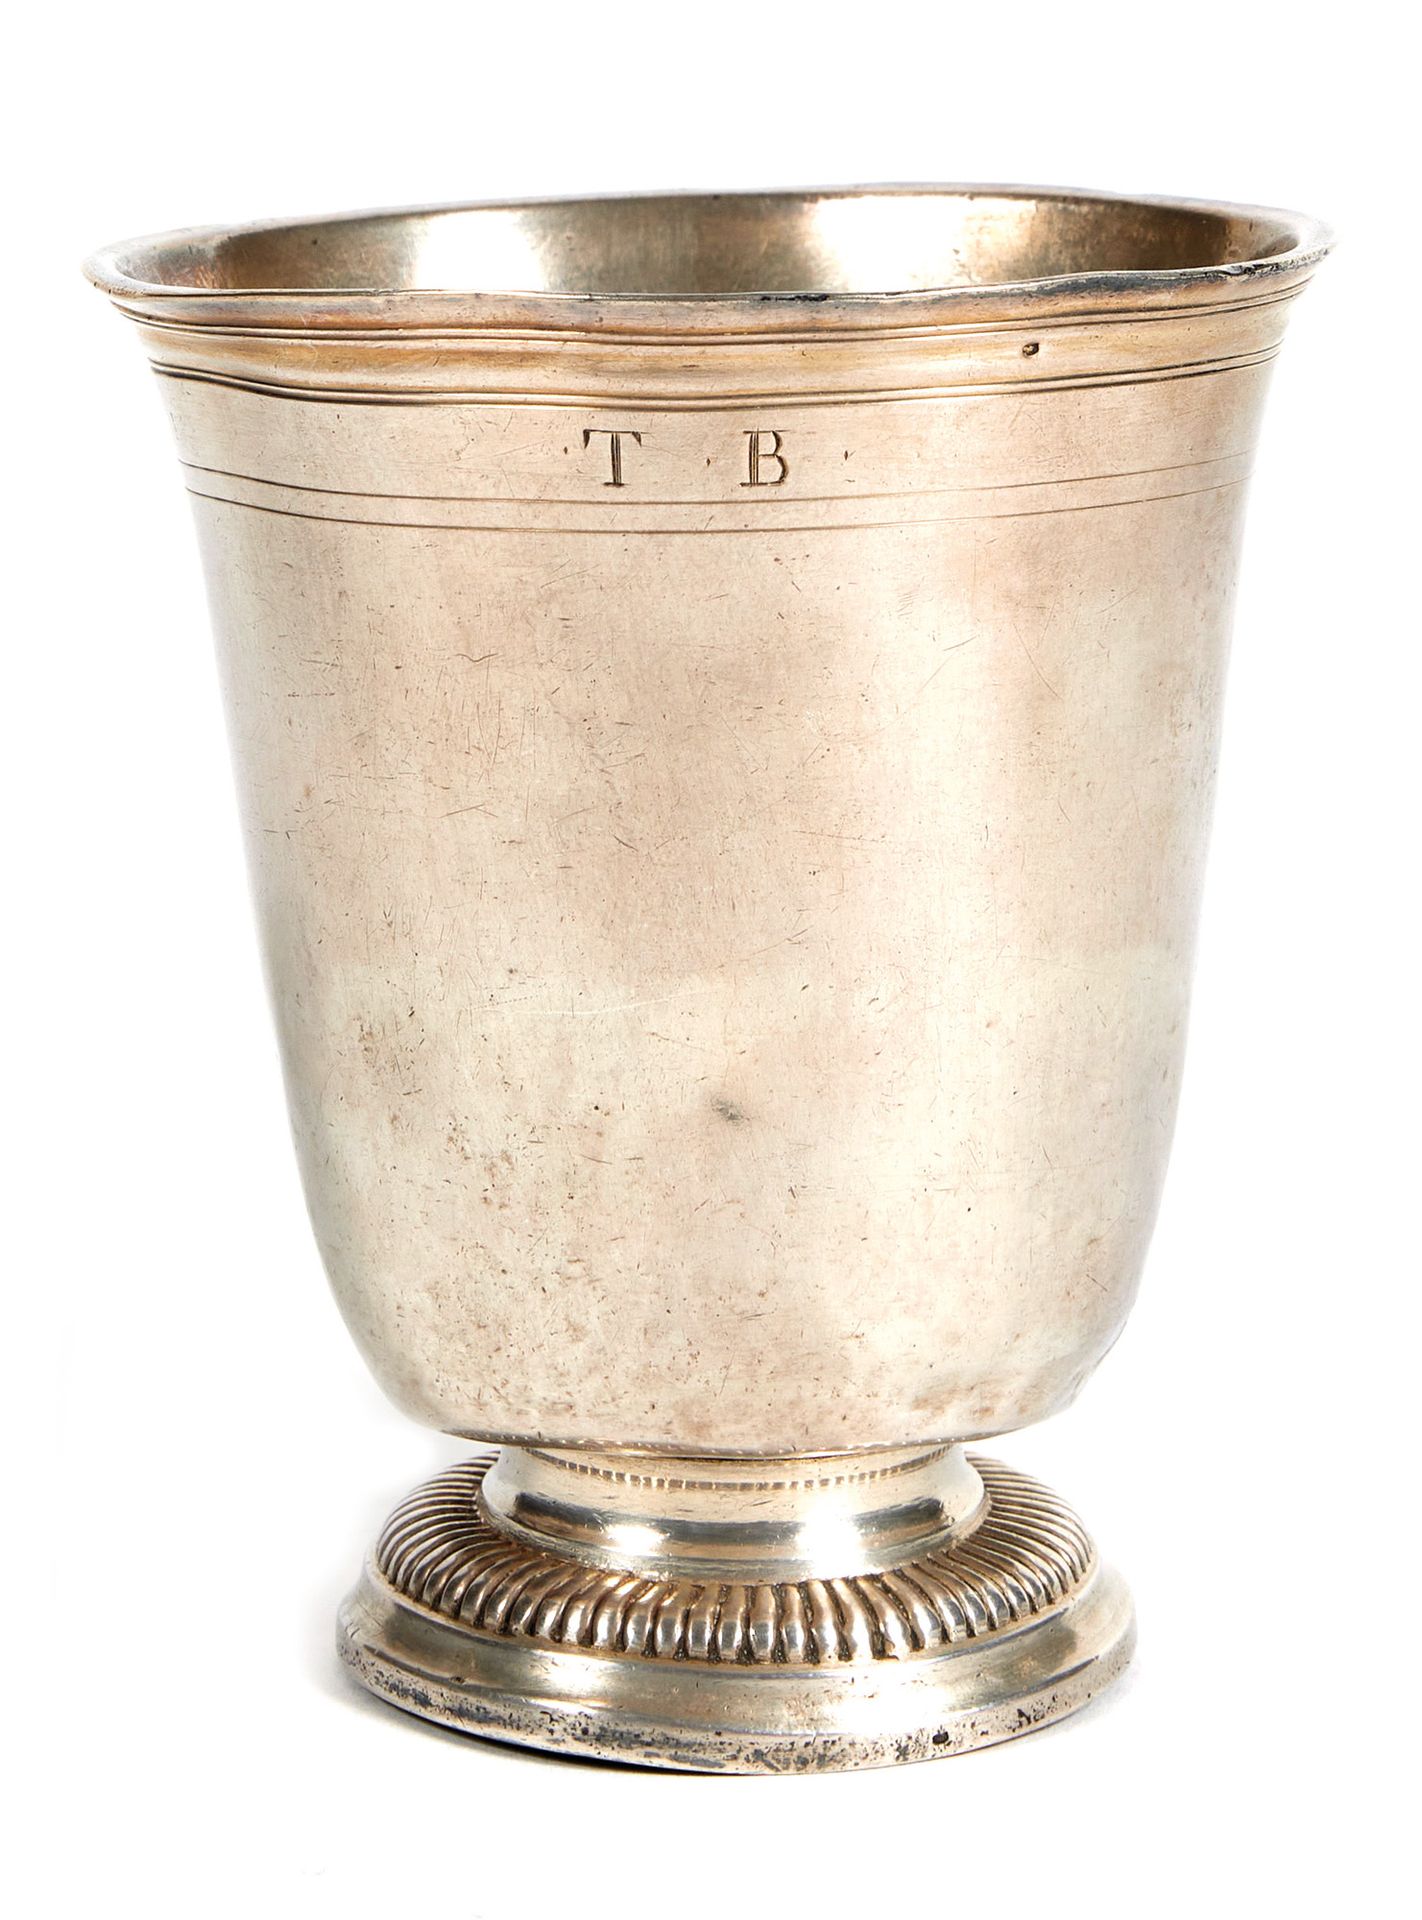 TIMBALE TULIPE EN ARGENT 银色的郁金香杯

作者：Rémy Giboux，巴黎，1734年

单一的基座上有一个椭圆形的边框，刻有首字母&hellip;